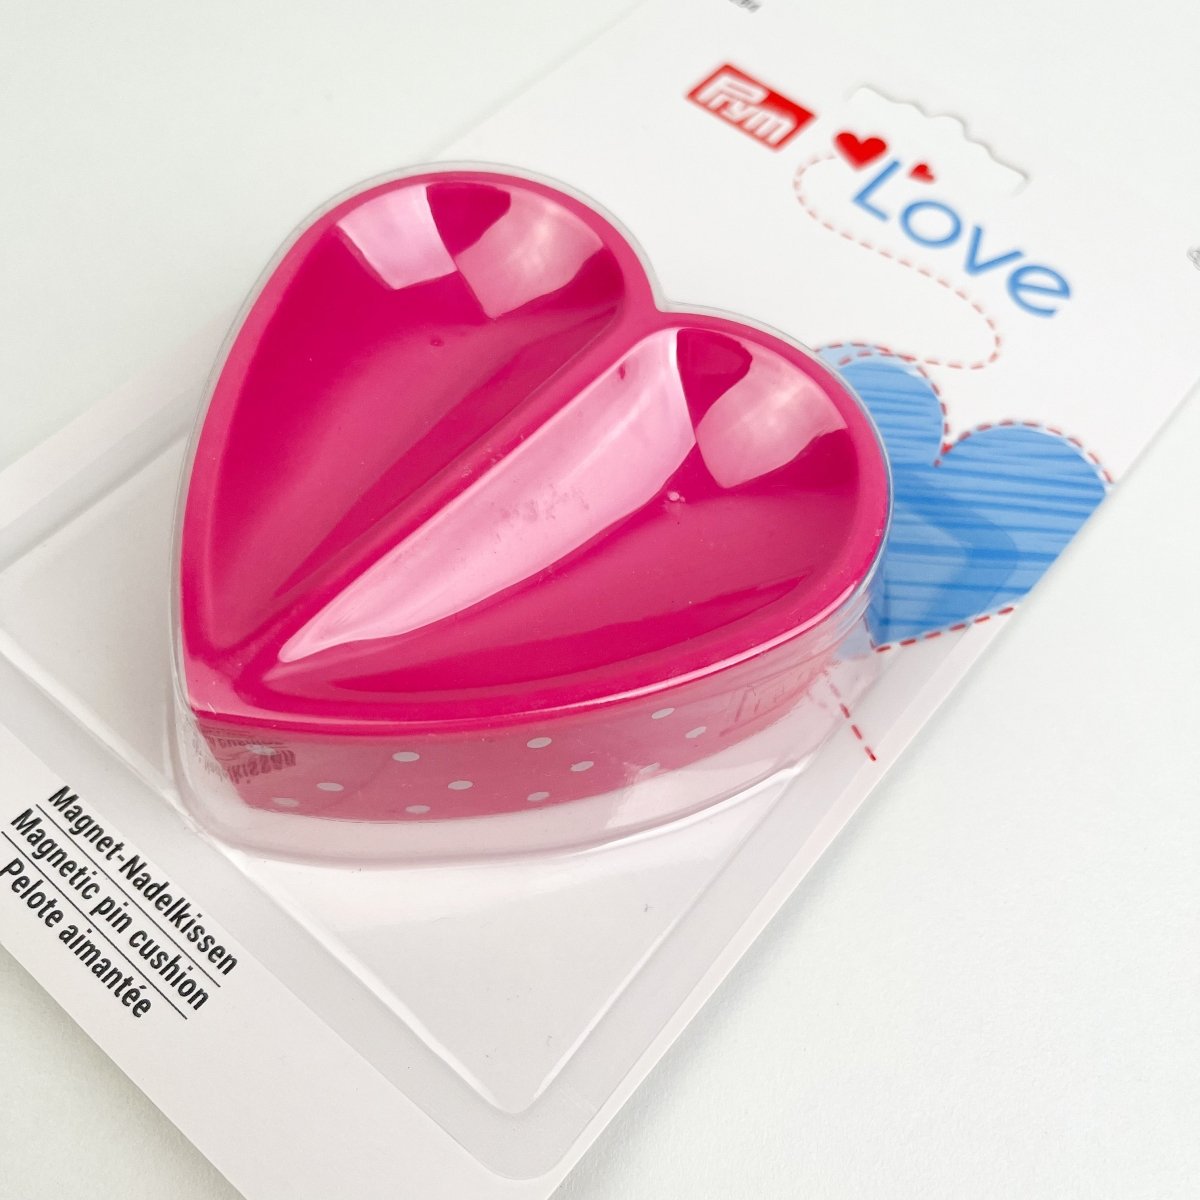 Prym Love - Heart Shaped Magnetic Pin Cushion - Sewing Gem